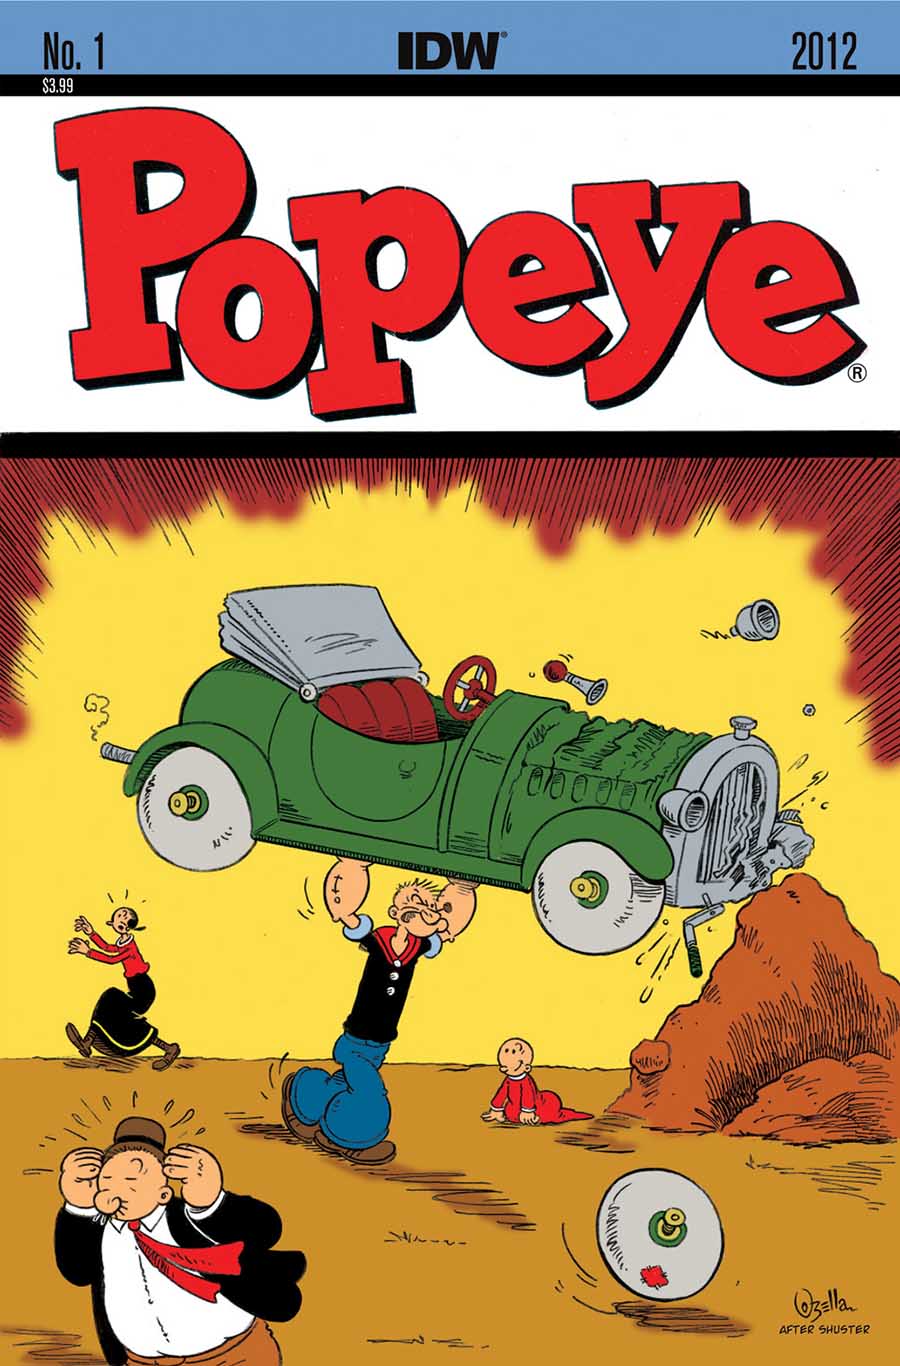 Popeye (Roger Langridge)